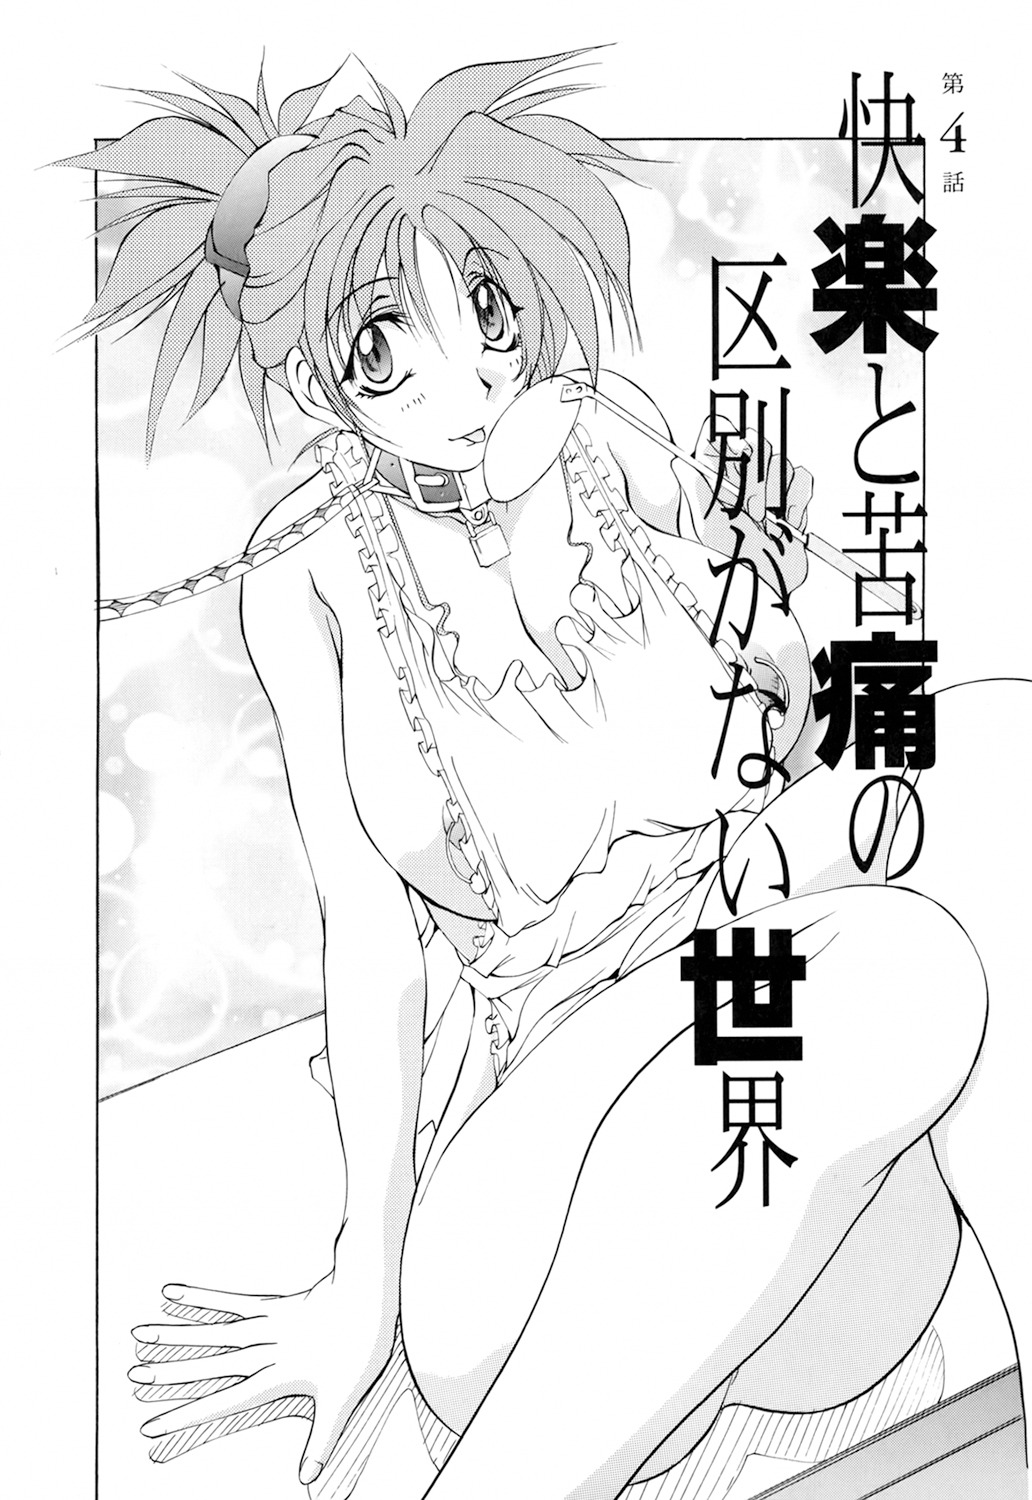 Black Mass Chapter 4 by Mikoshiro Nagitoh An original yuri h-manga chapter that contains